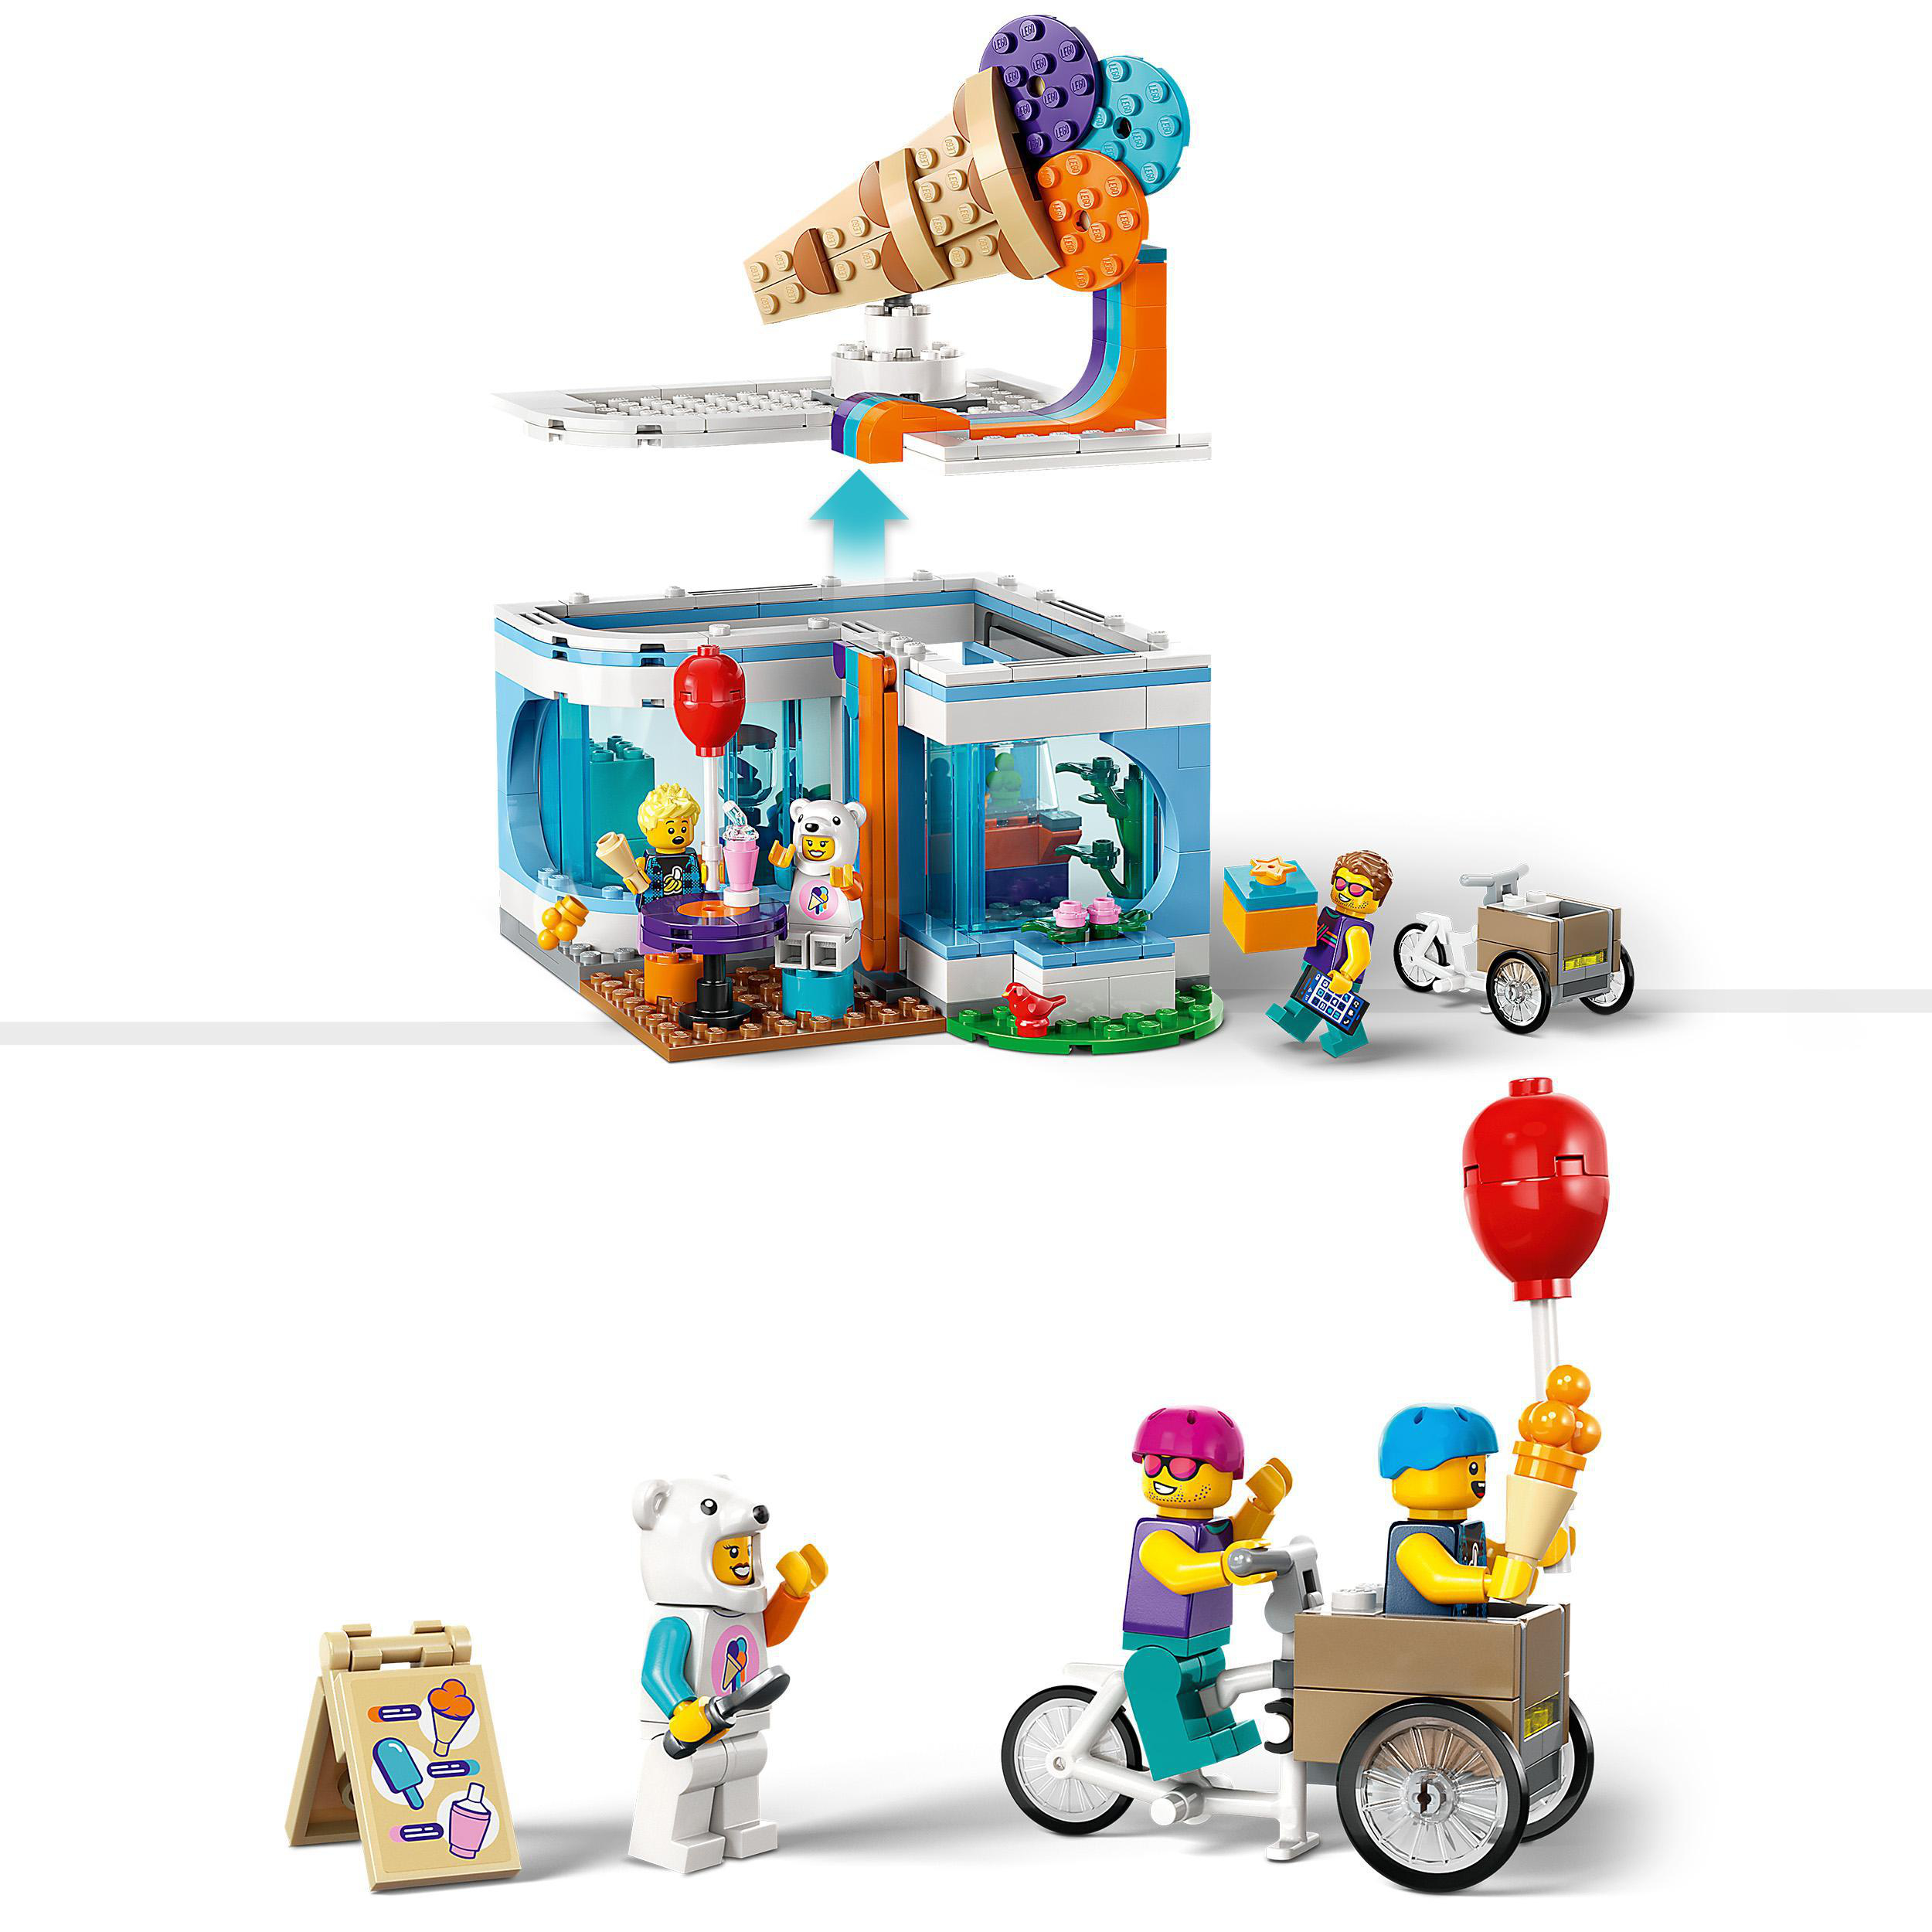 LEGO City 60363 Eisdiele Mehrfarbig Bausatz